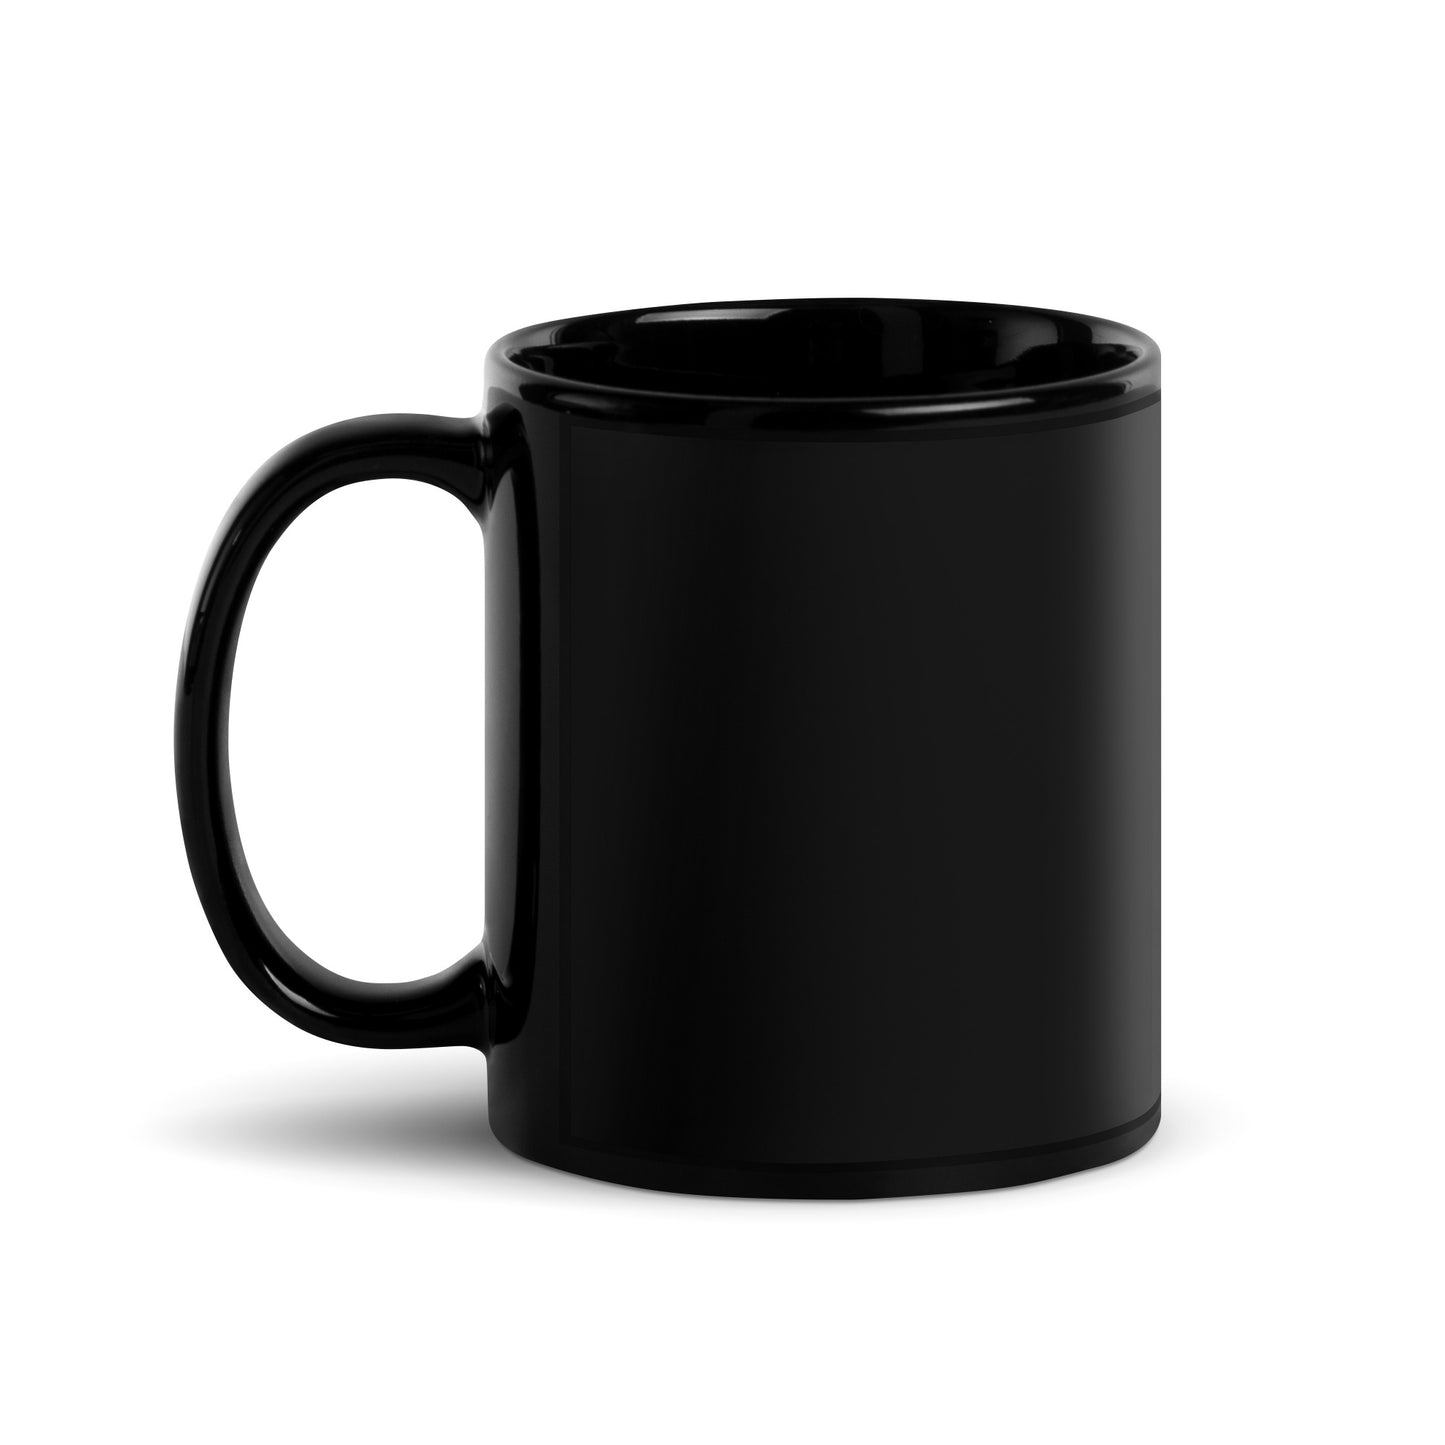 "IT Support" Black Glossy Mug